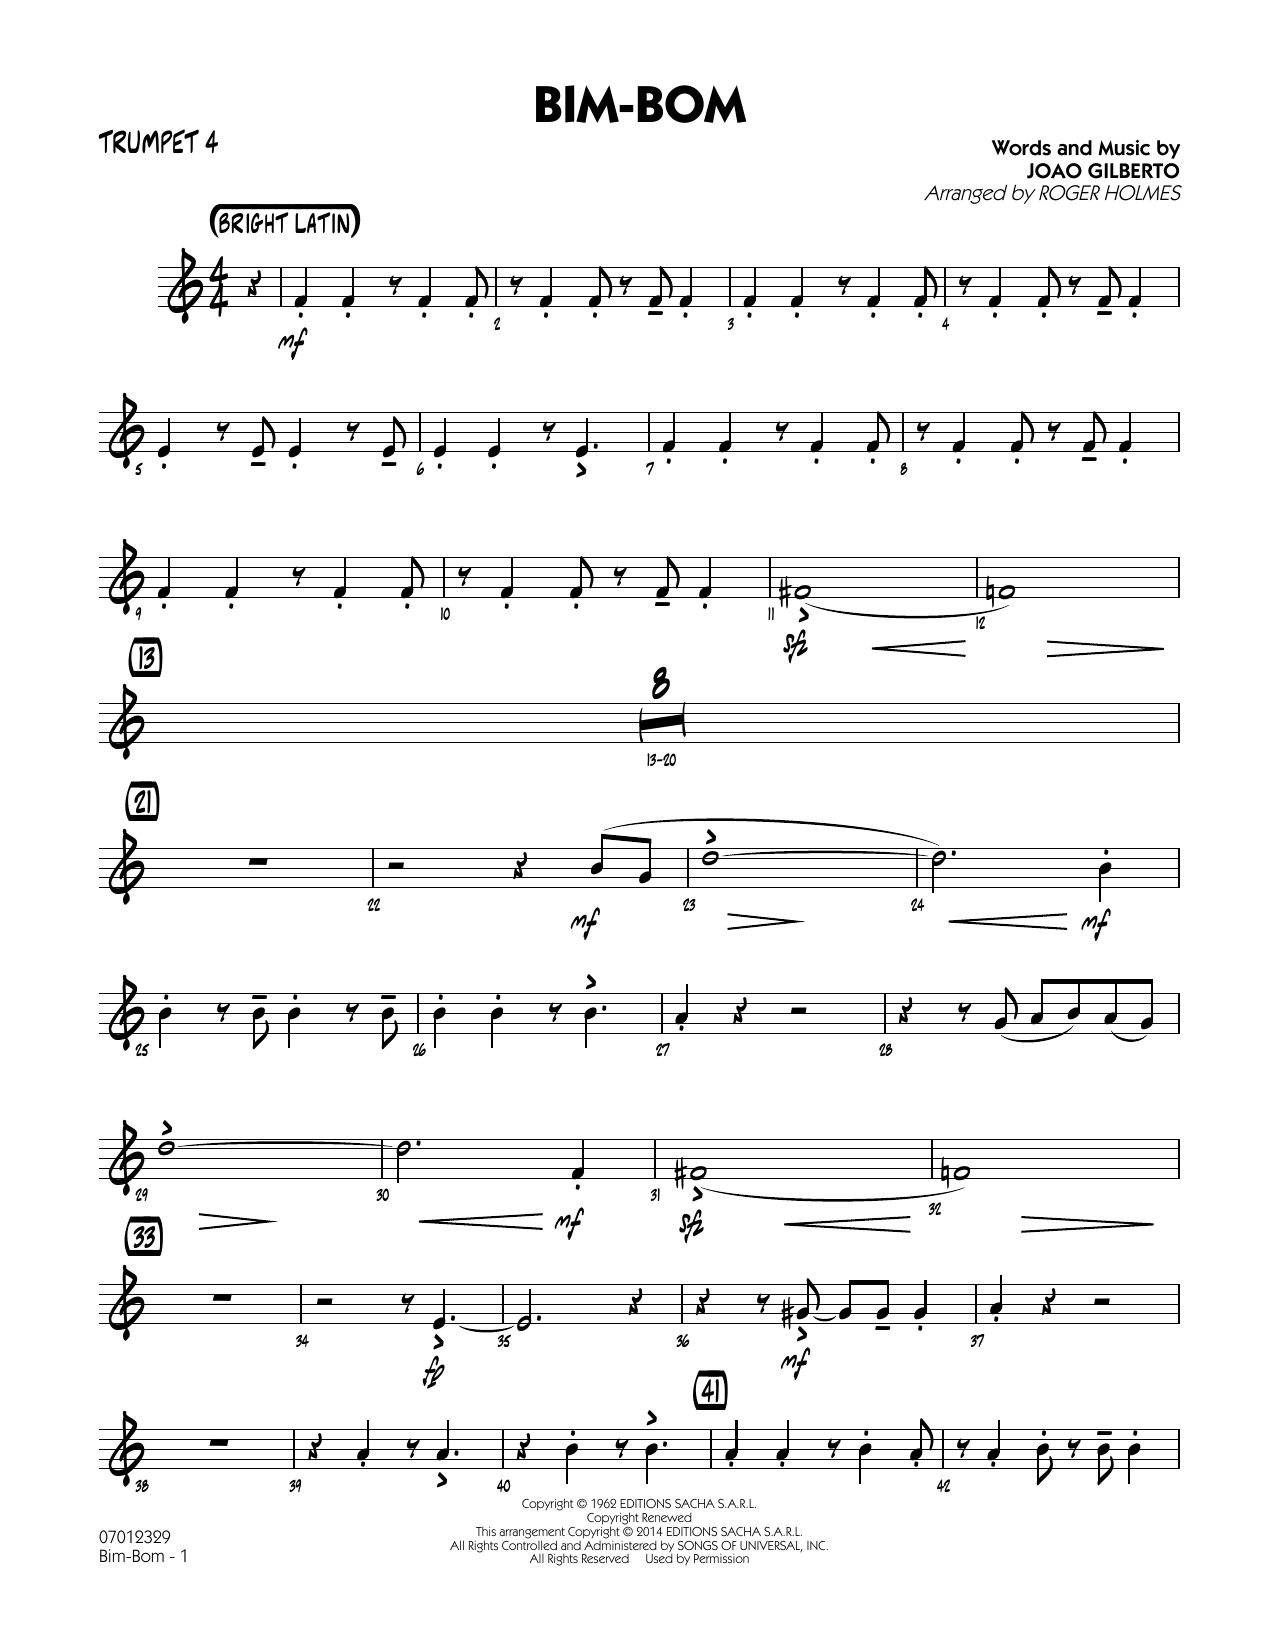 Roger Holmes Bim-Bom - Trumpet 4 sheet music notes and chords. Download Printable PDF.